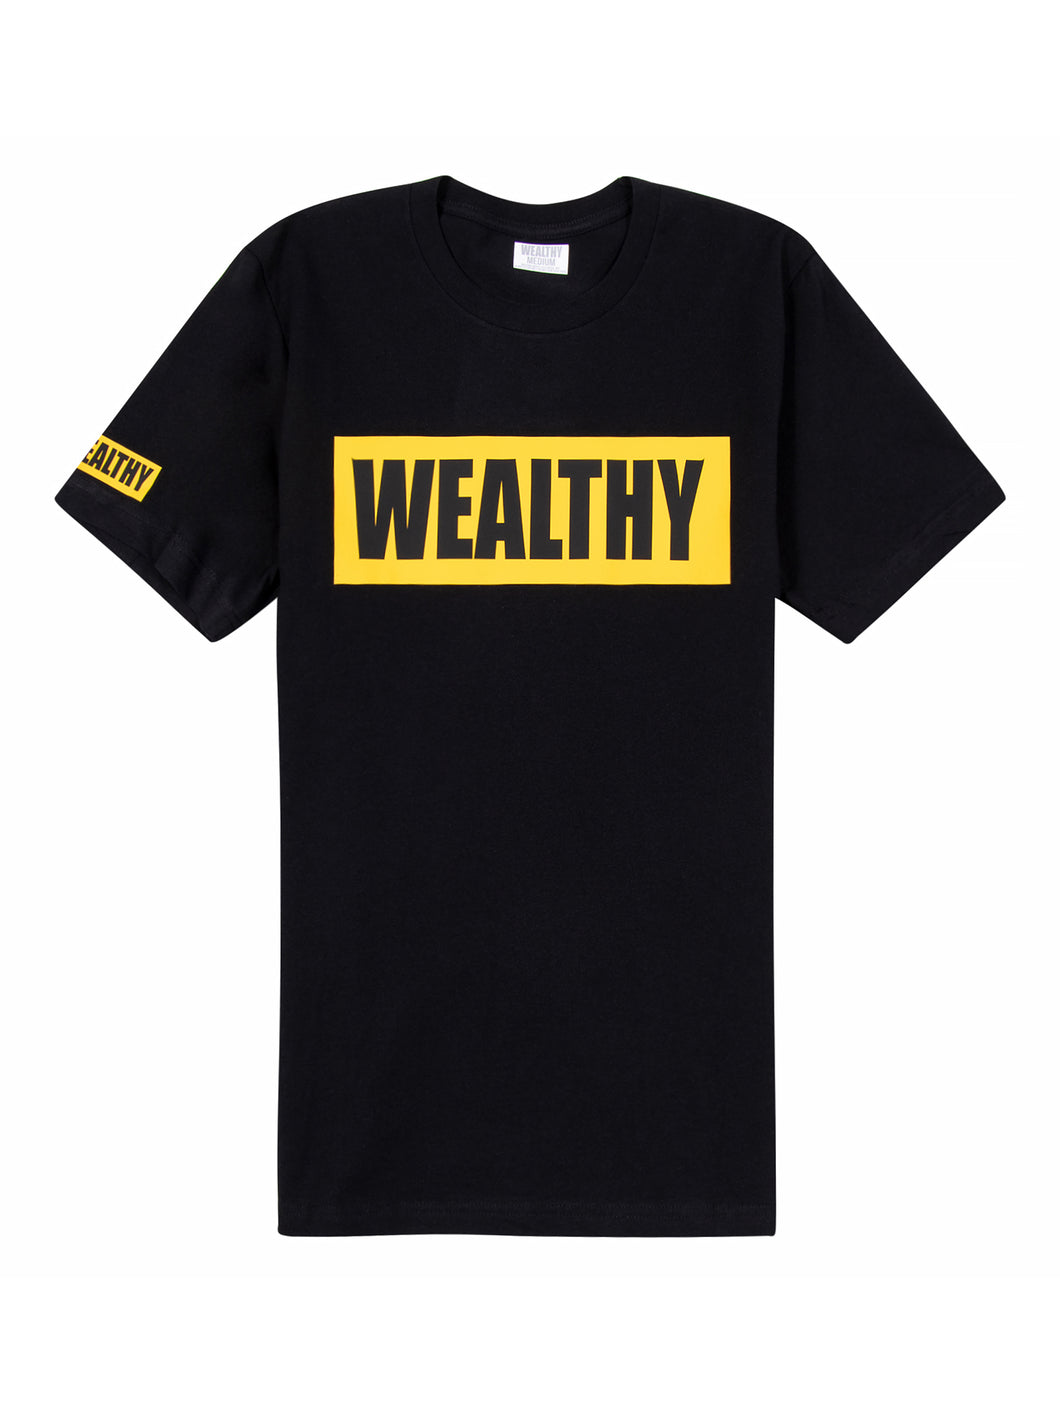 Wealthy Tee (Black/Yellow)